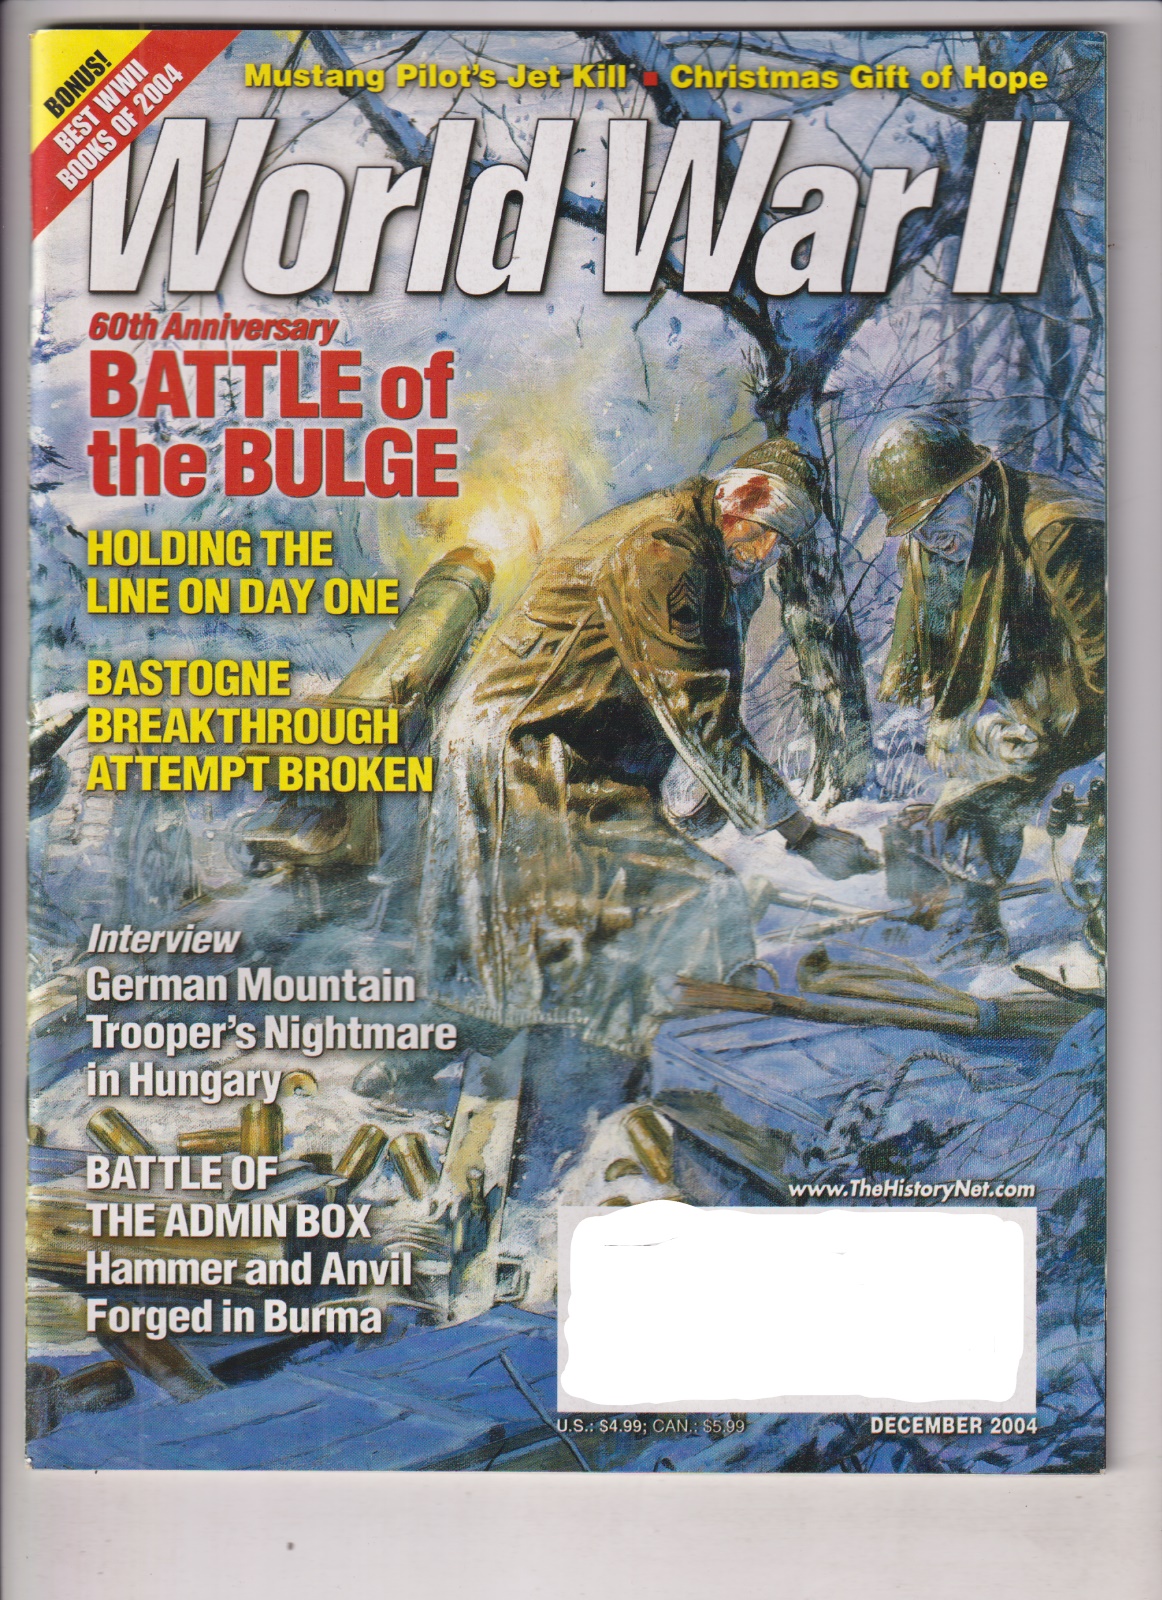 [WORLD WAR II-2019-11-01-28] WORLD WAR II [01-Dec-04]